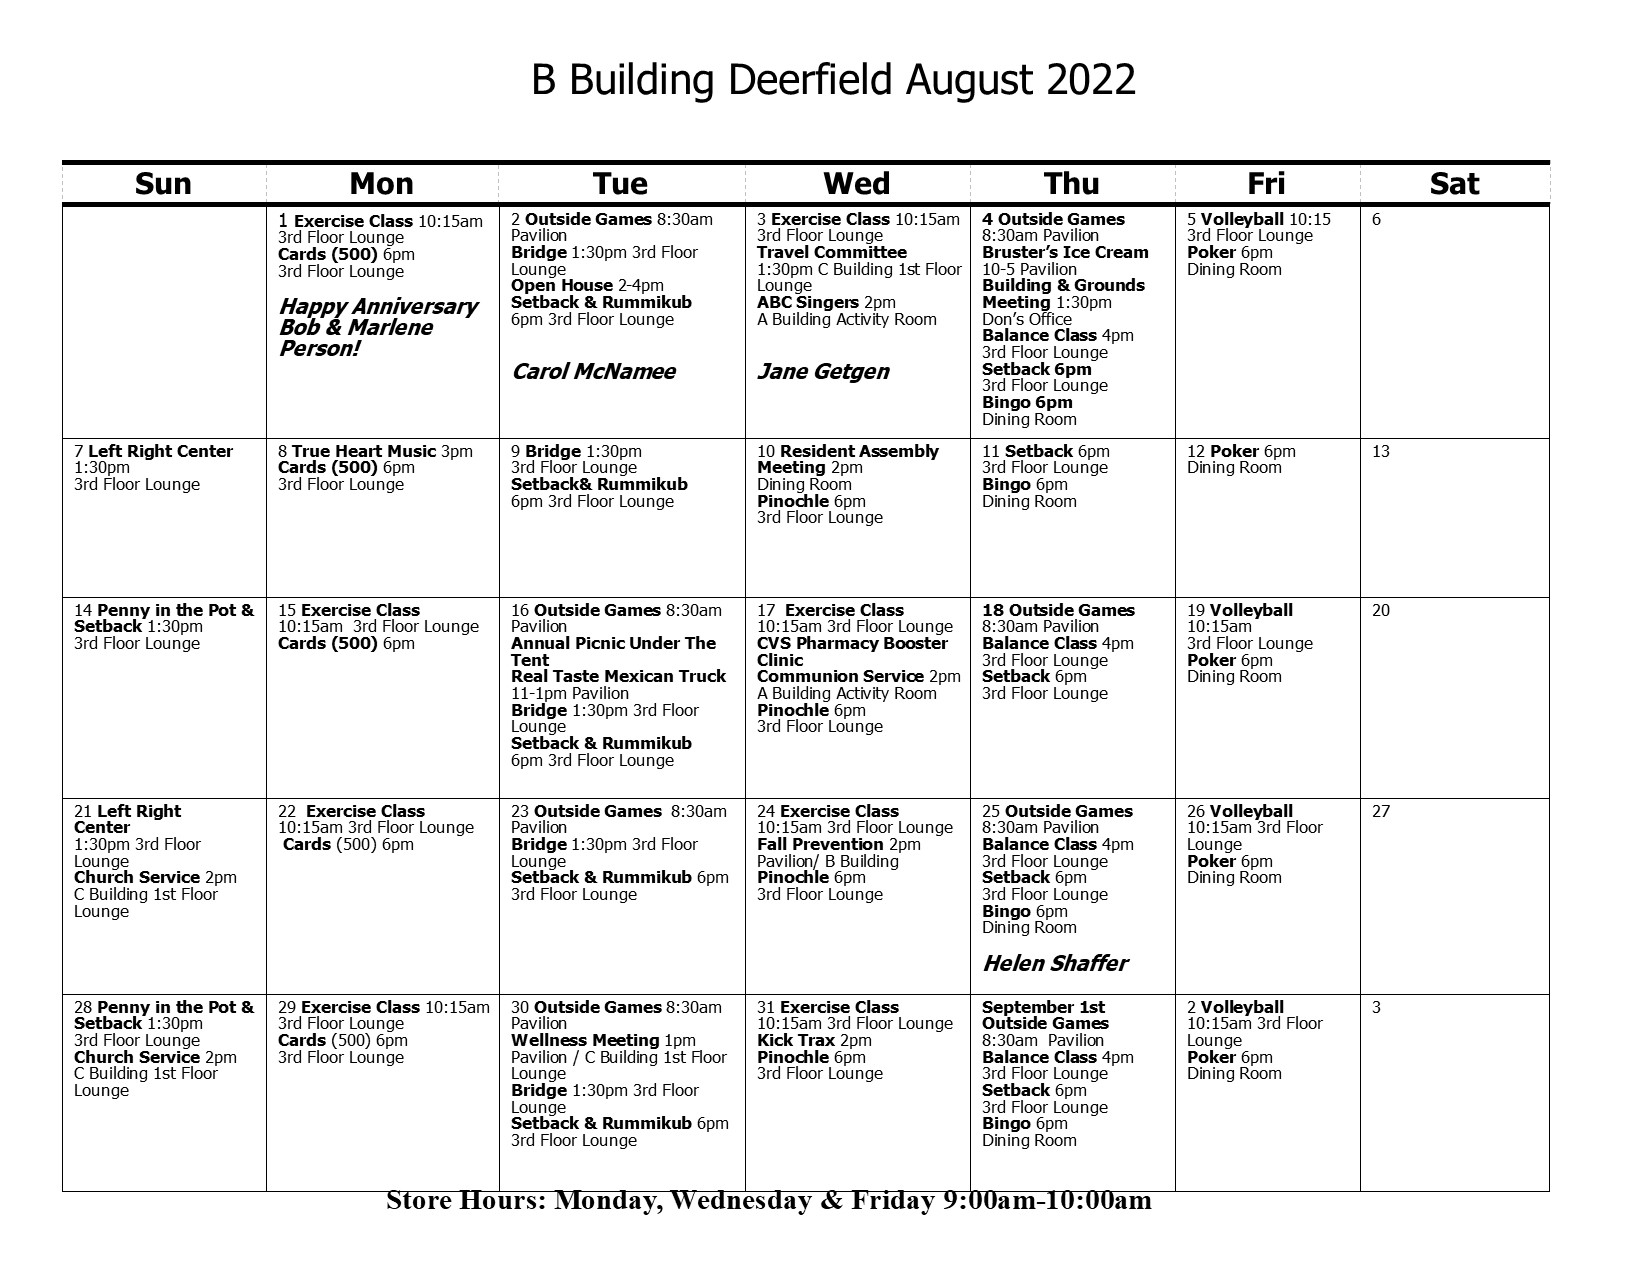 B Building Calendar August 2022